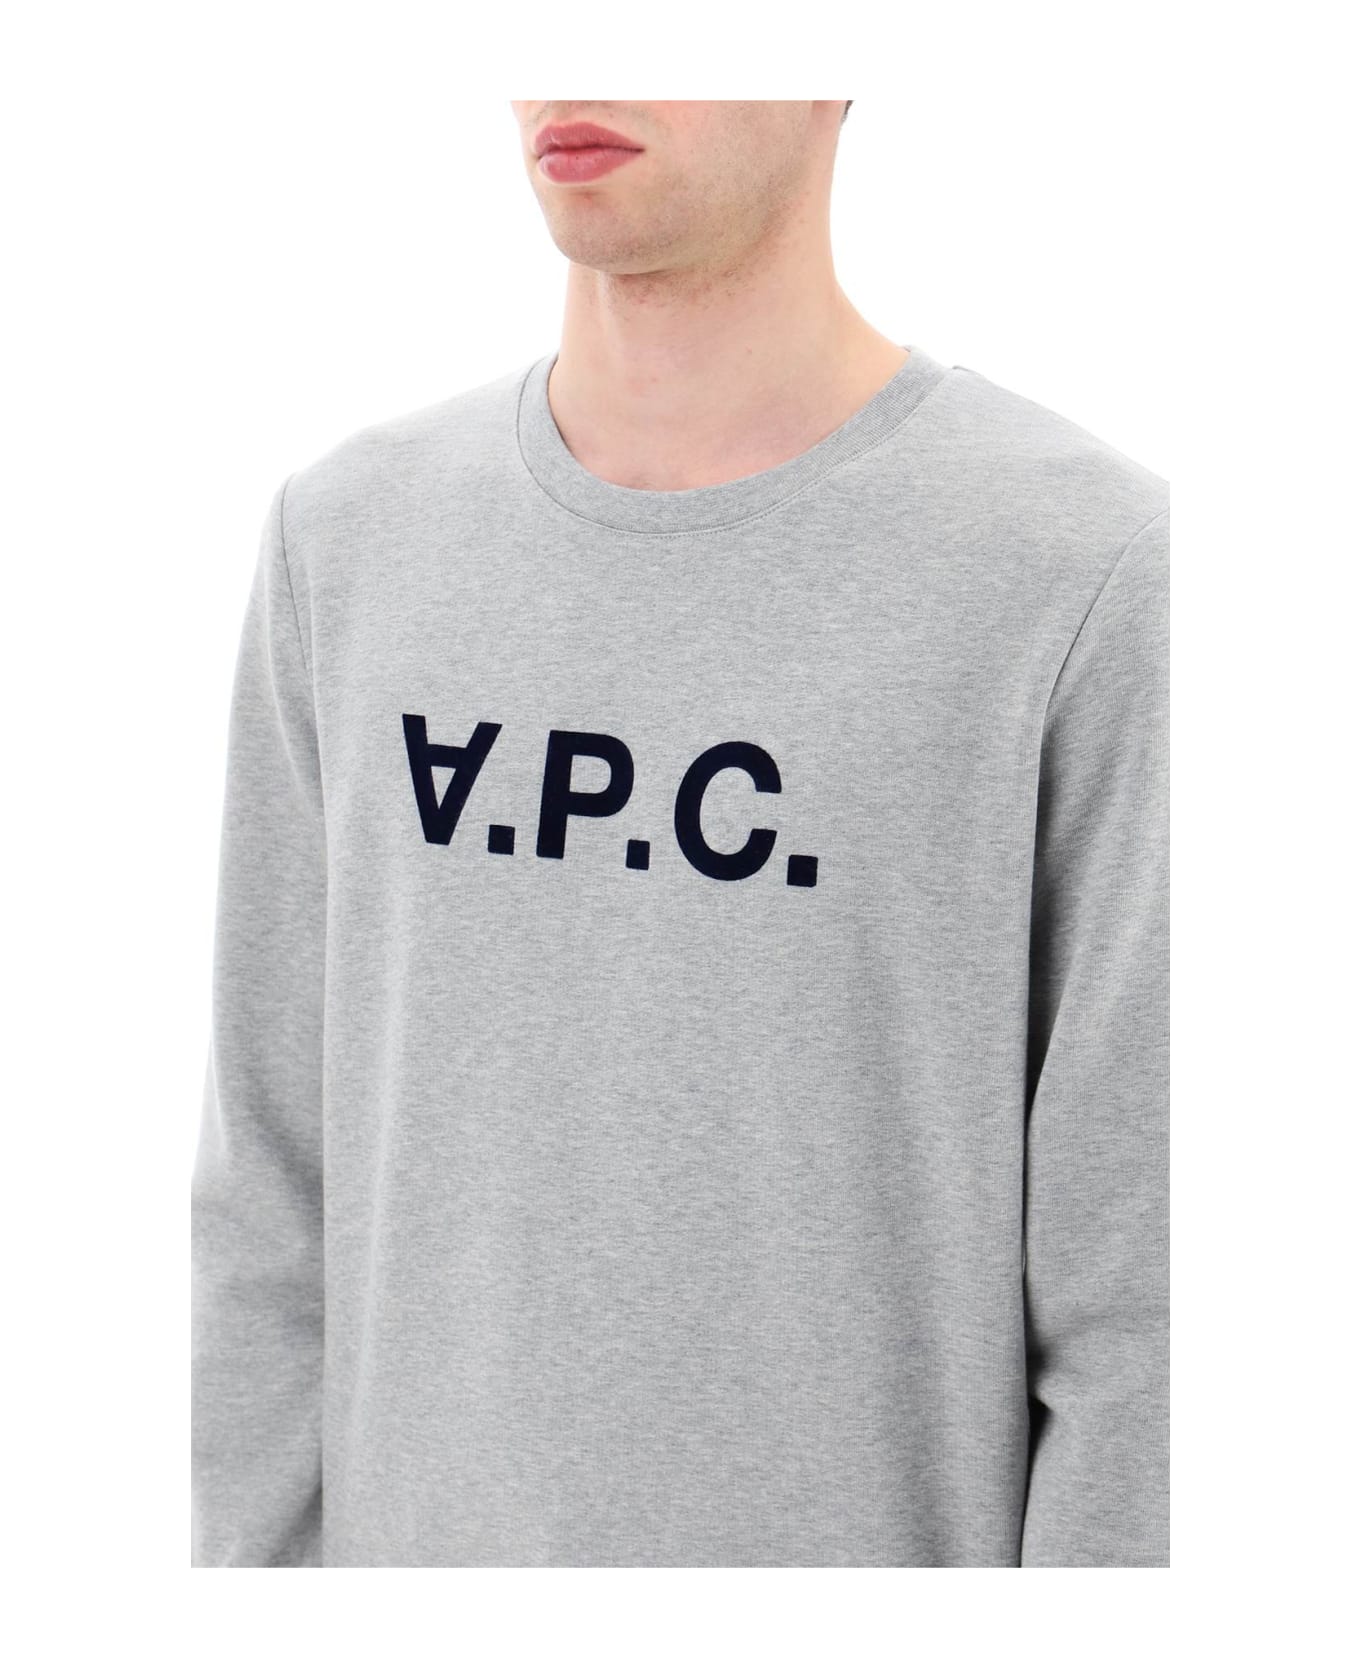 A.P.C. Cotton Sweatshirt With Logo - Heather grey